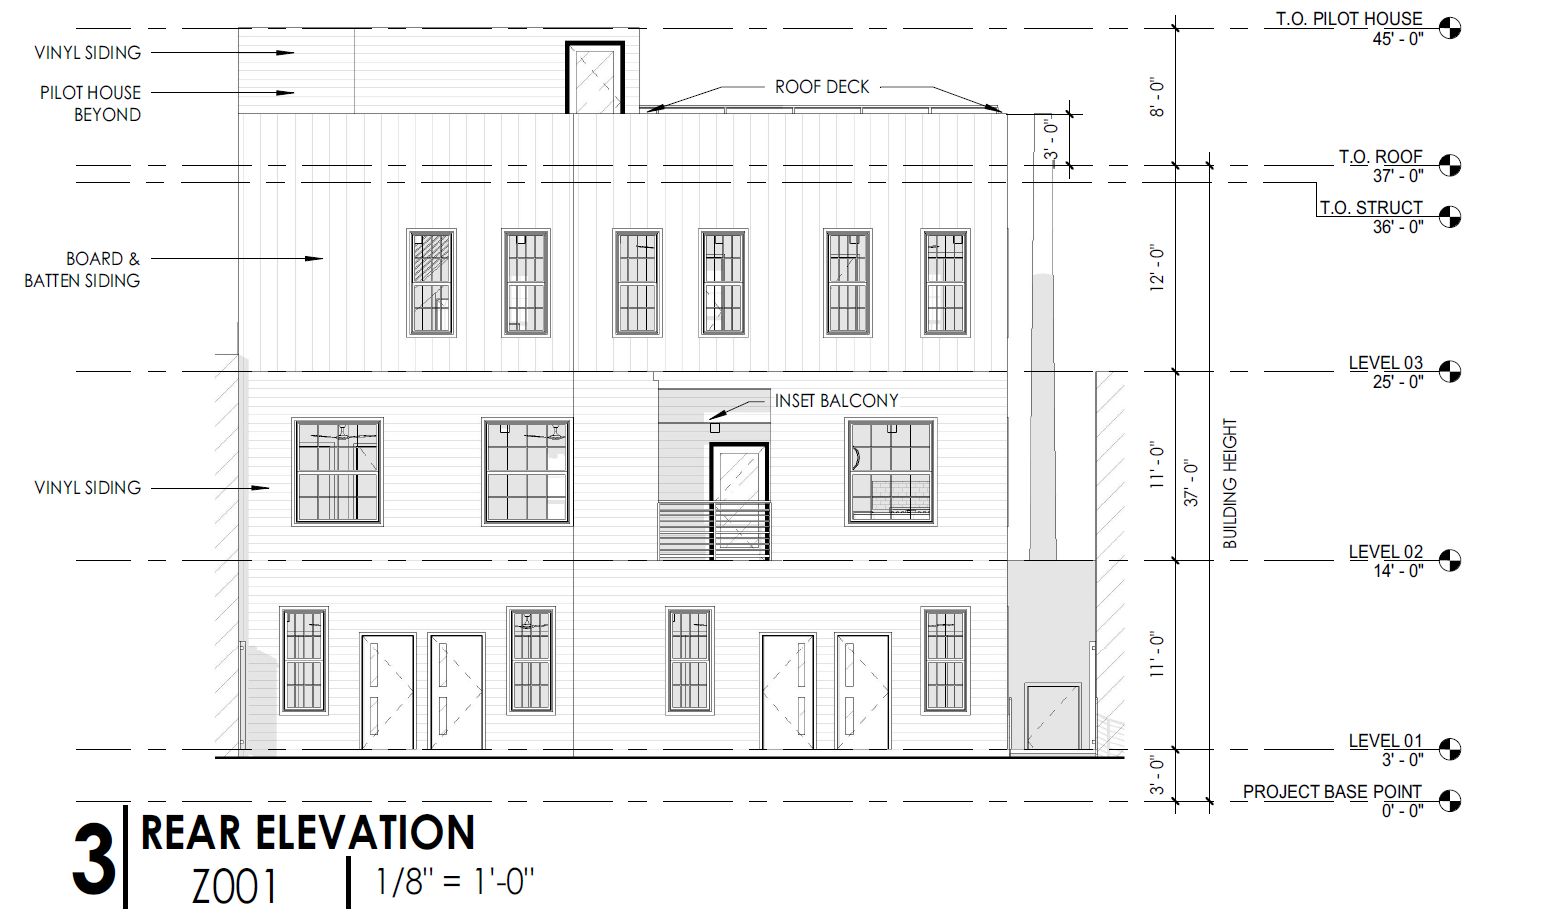 522 Green Lane. Building elevation. Credit: Designblendz via the City of Philadelphia